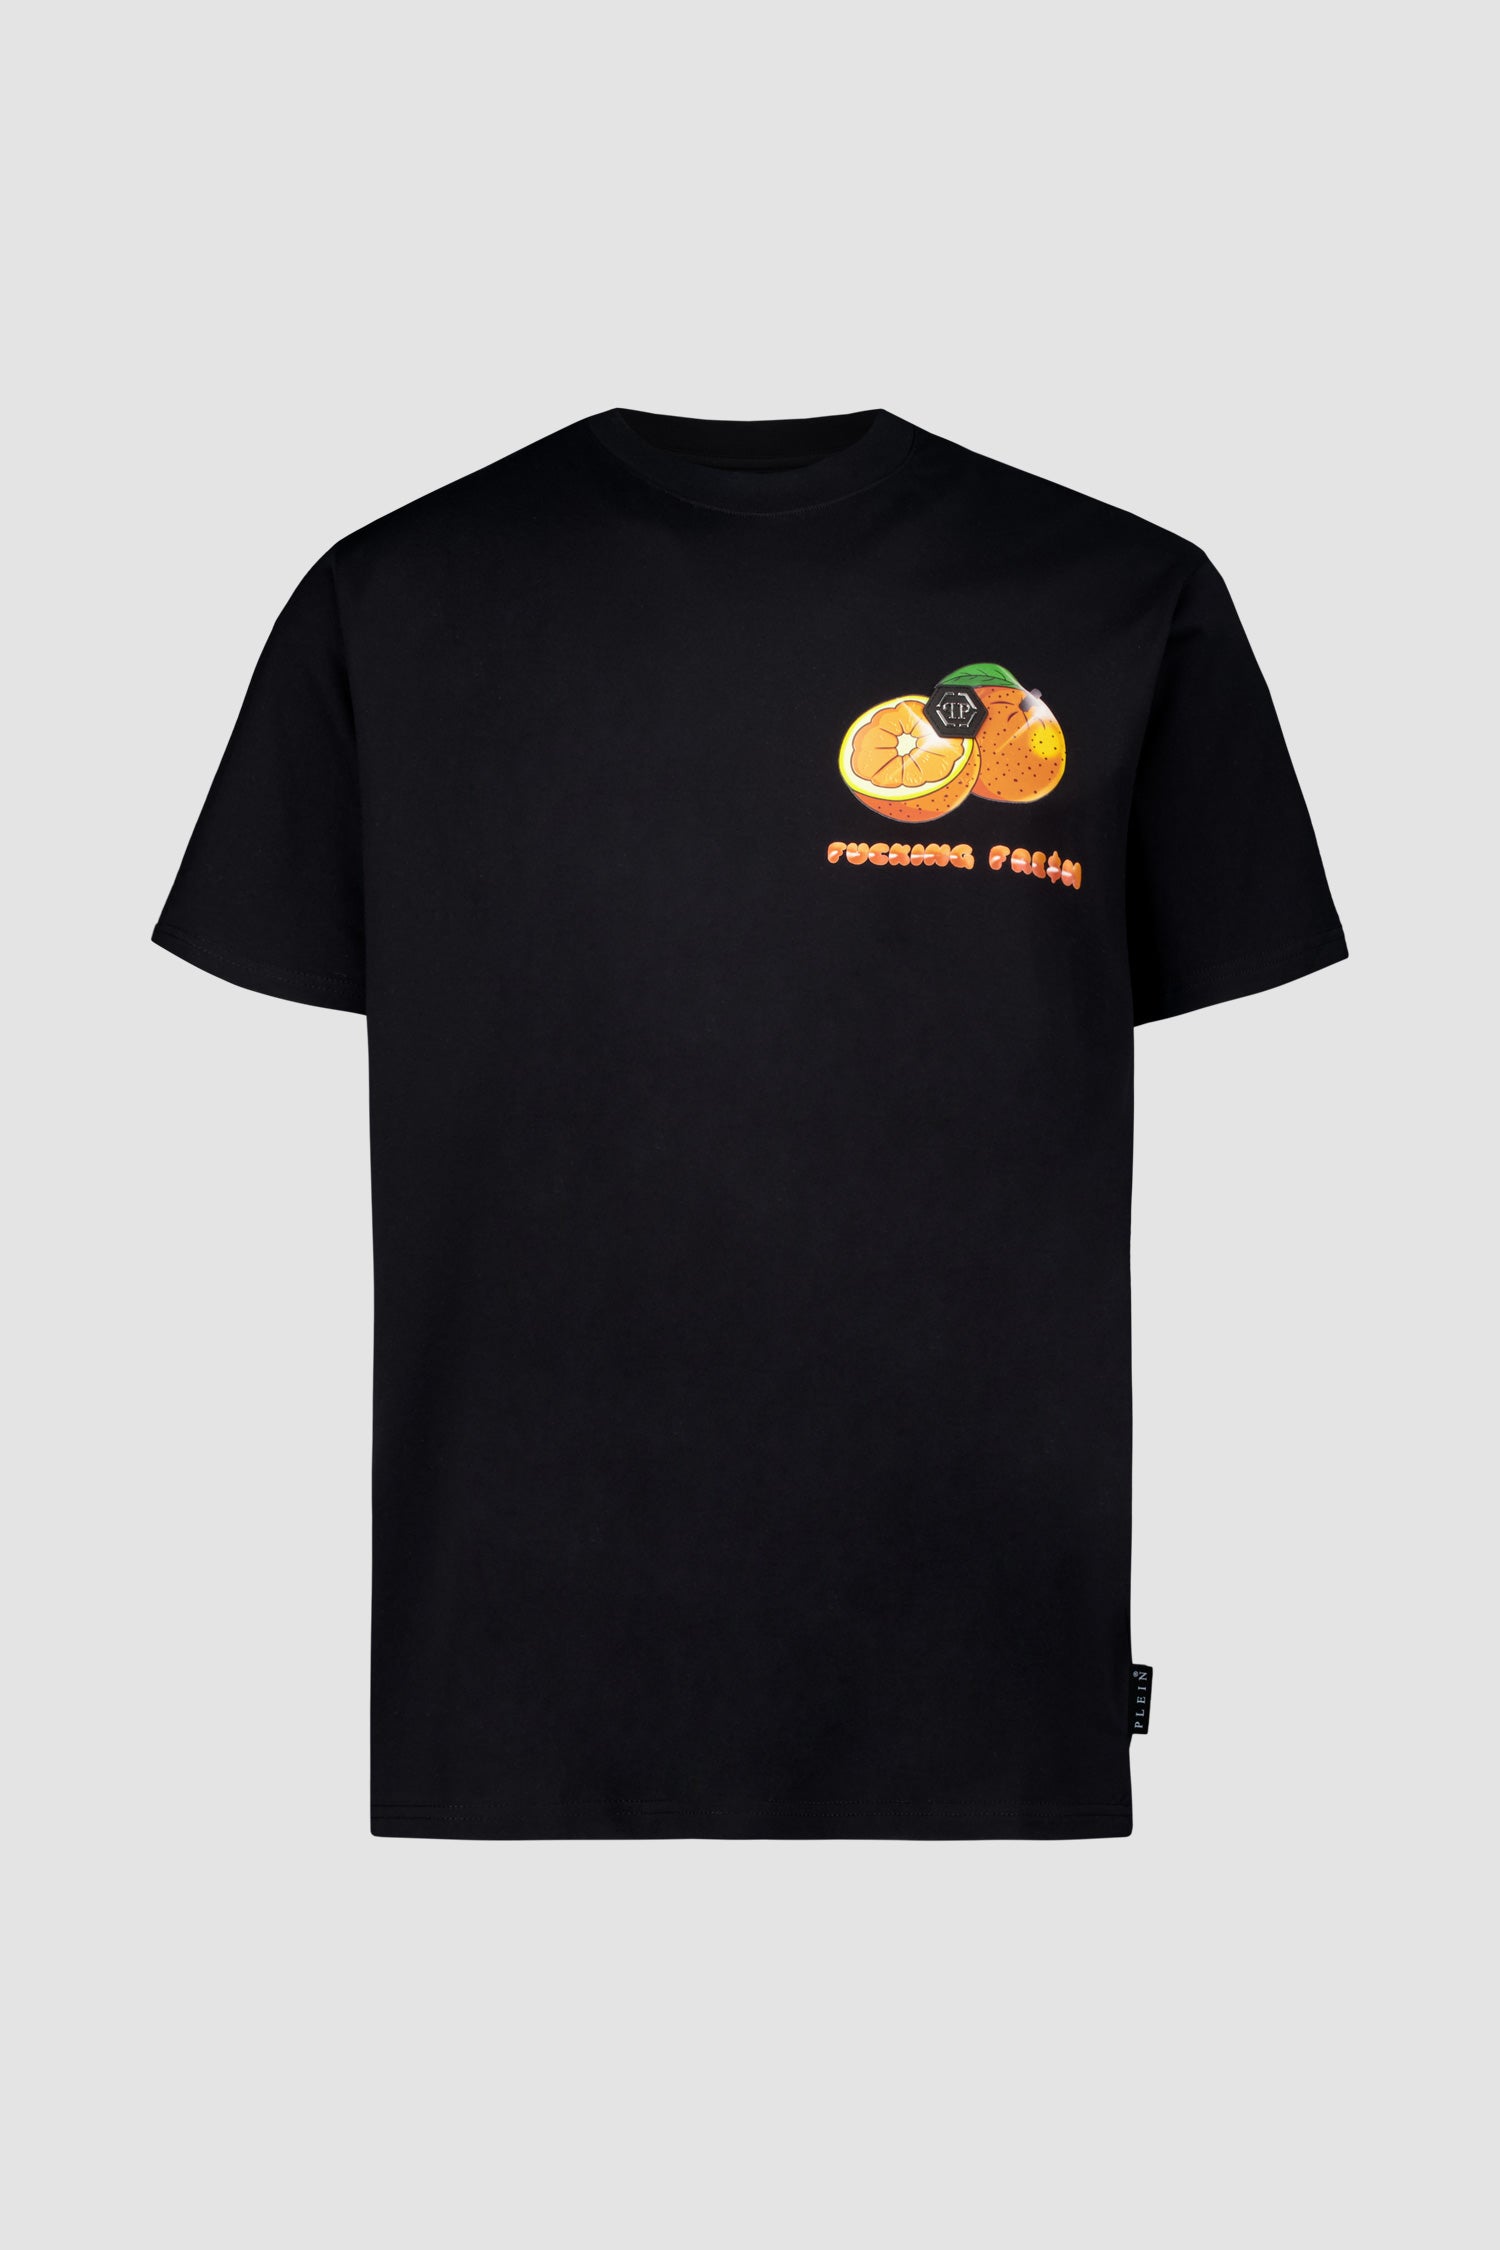 Philipp Plein Black Round Neck SS PAK T-Shirt